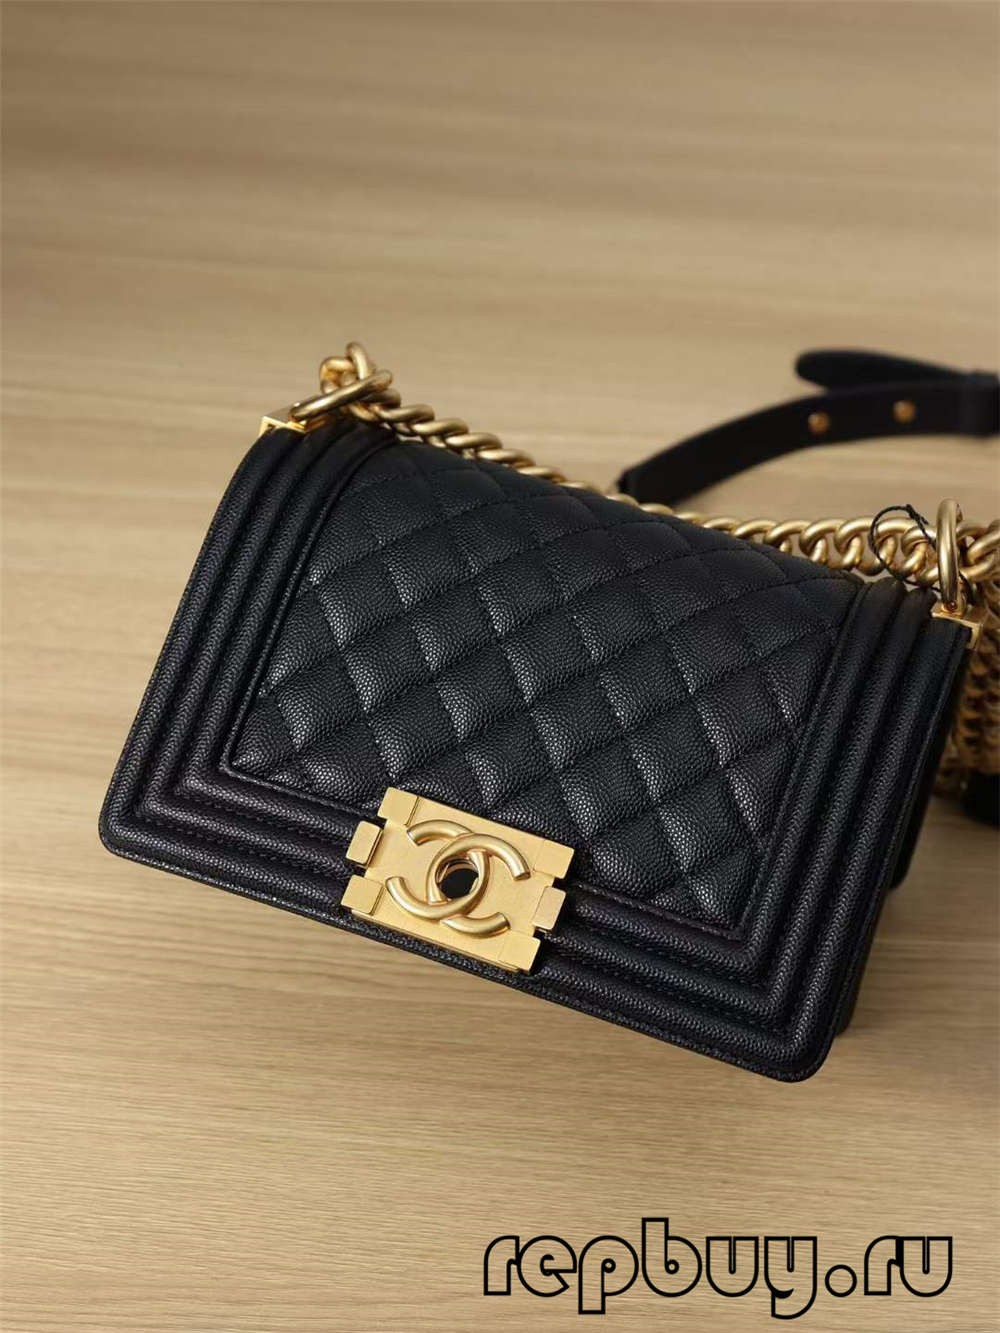 Chanel Le boy top replica handbags small gold buckle detail (2022 Latest)-Best Quality Fake Louis Vuitton Bag Online Store, Replica designer bag ru